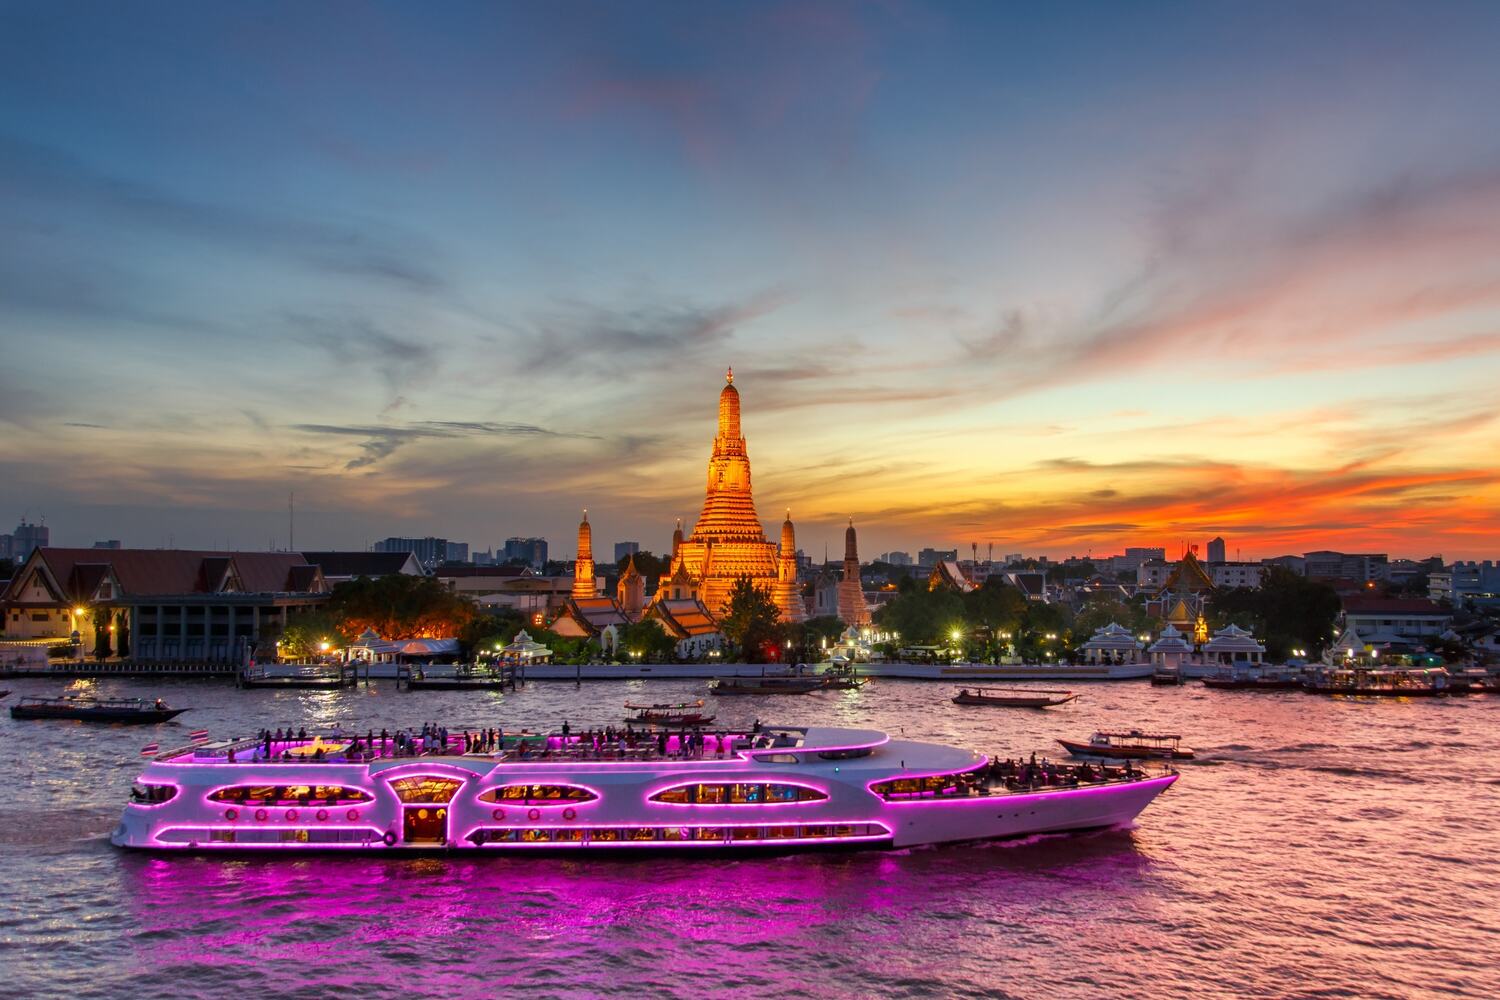 Take a Dinner Cruise Along the Chao Phraya River